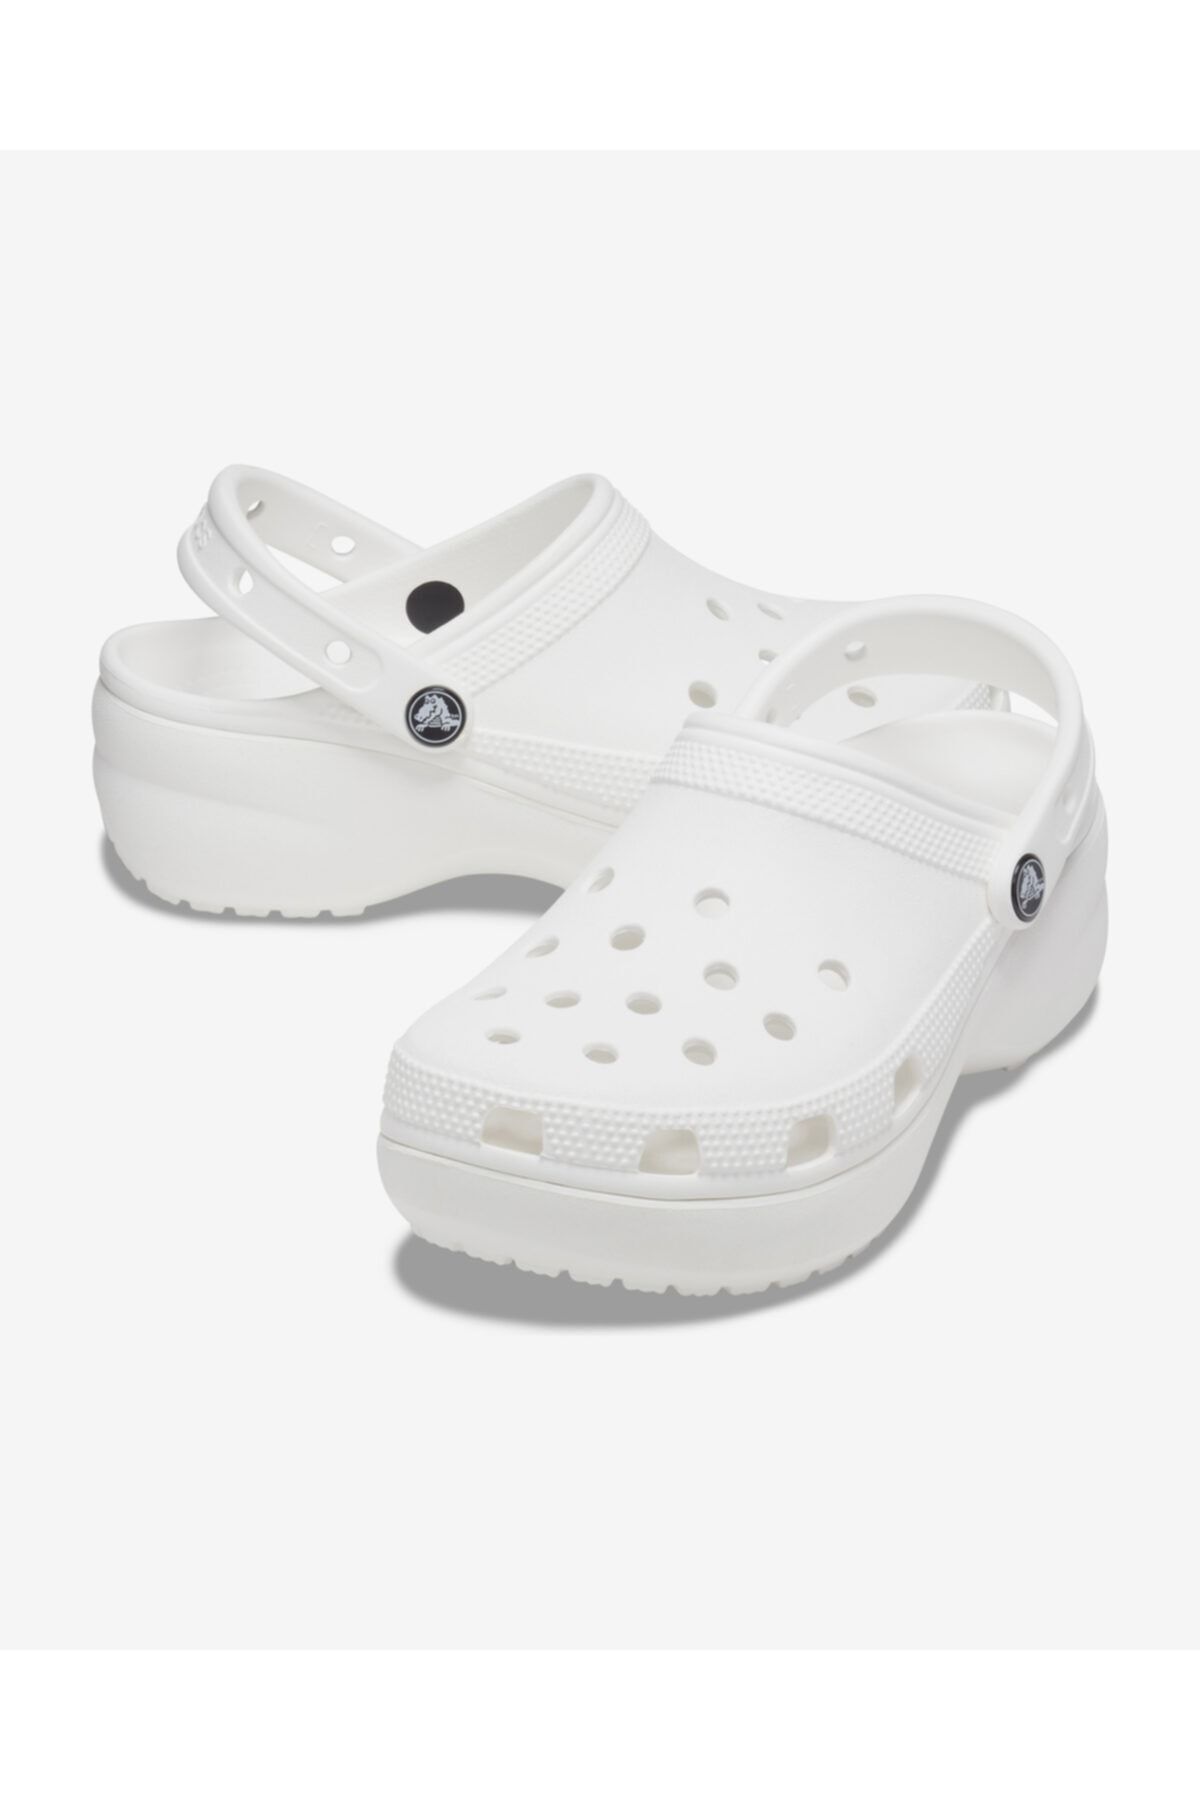 Crocs Classic Platform White